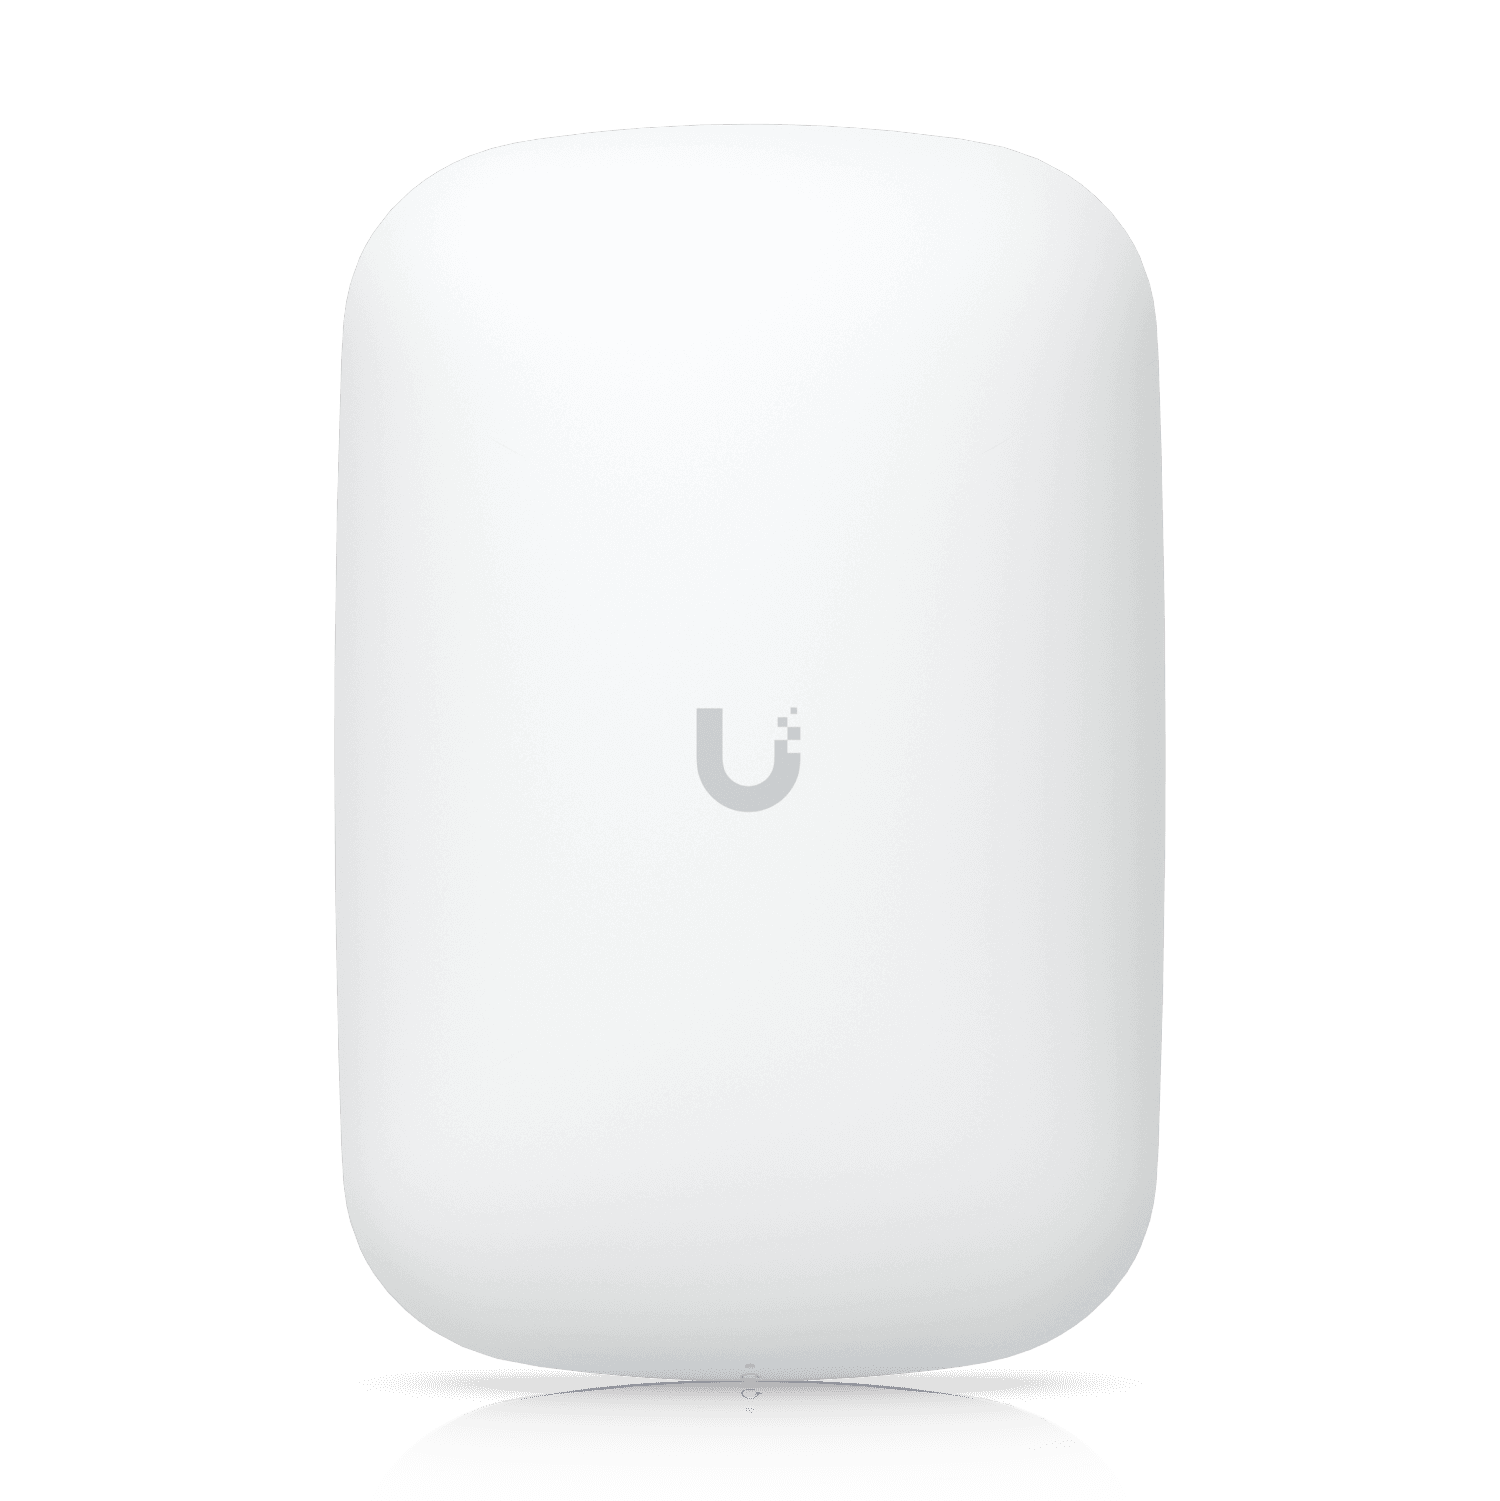 Ubiquiti Networks UDM-B-US UniFi Wall-Plug Extender 802.11ac US